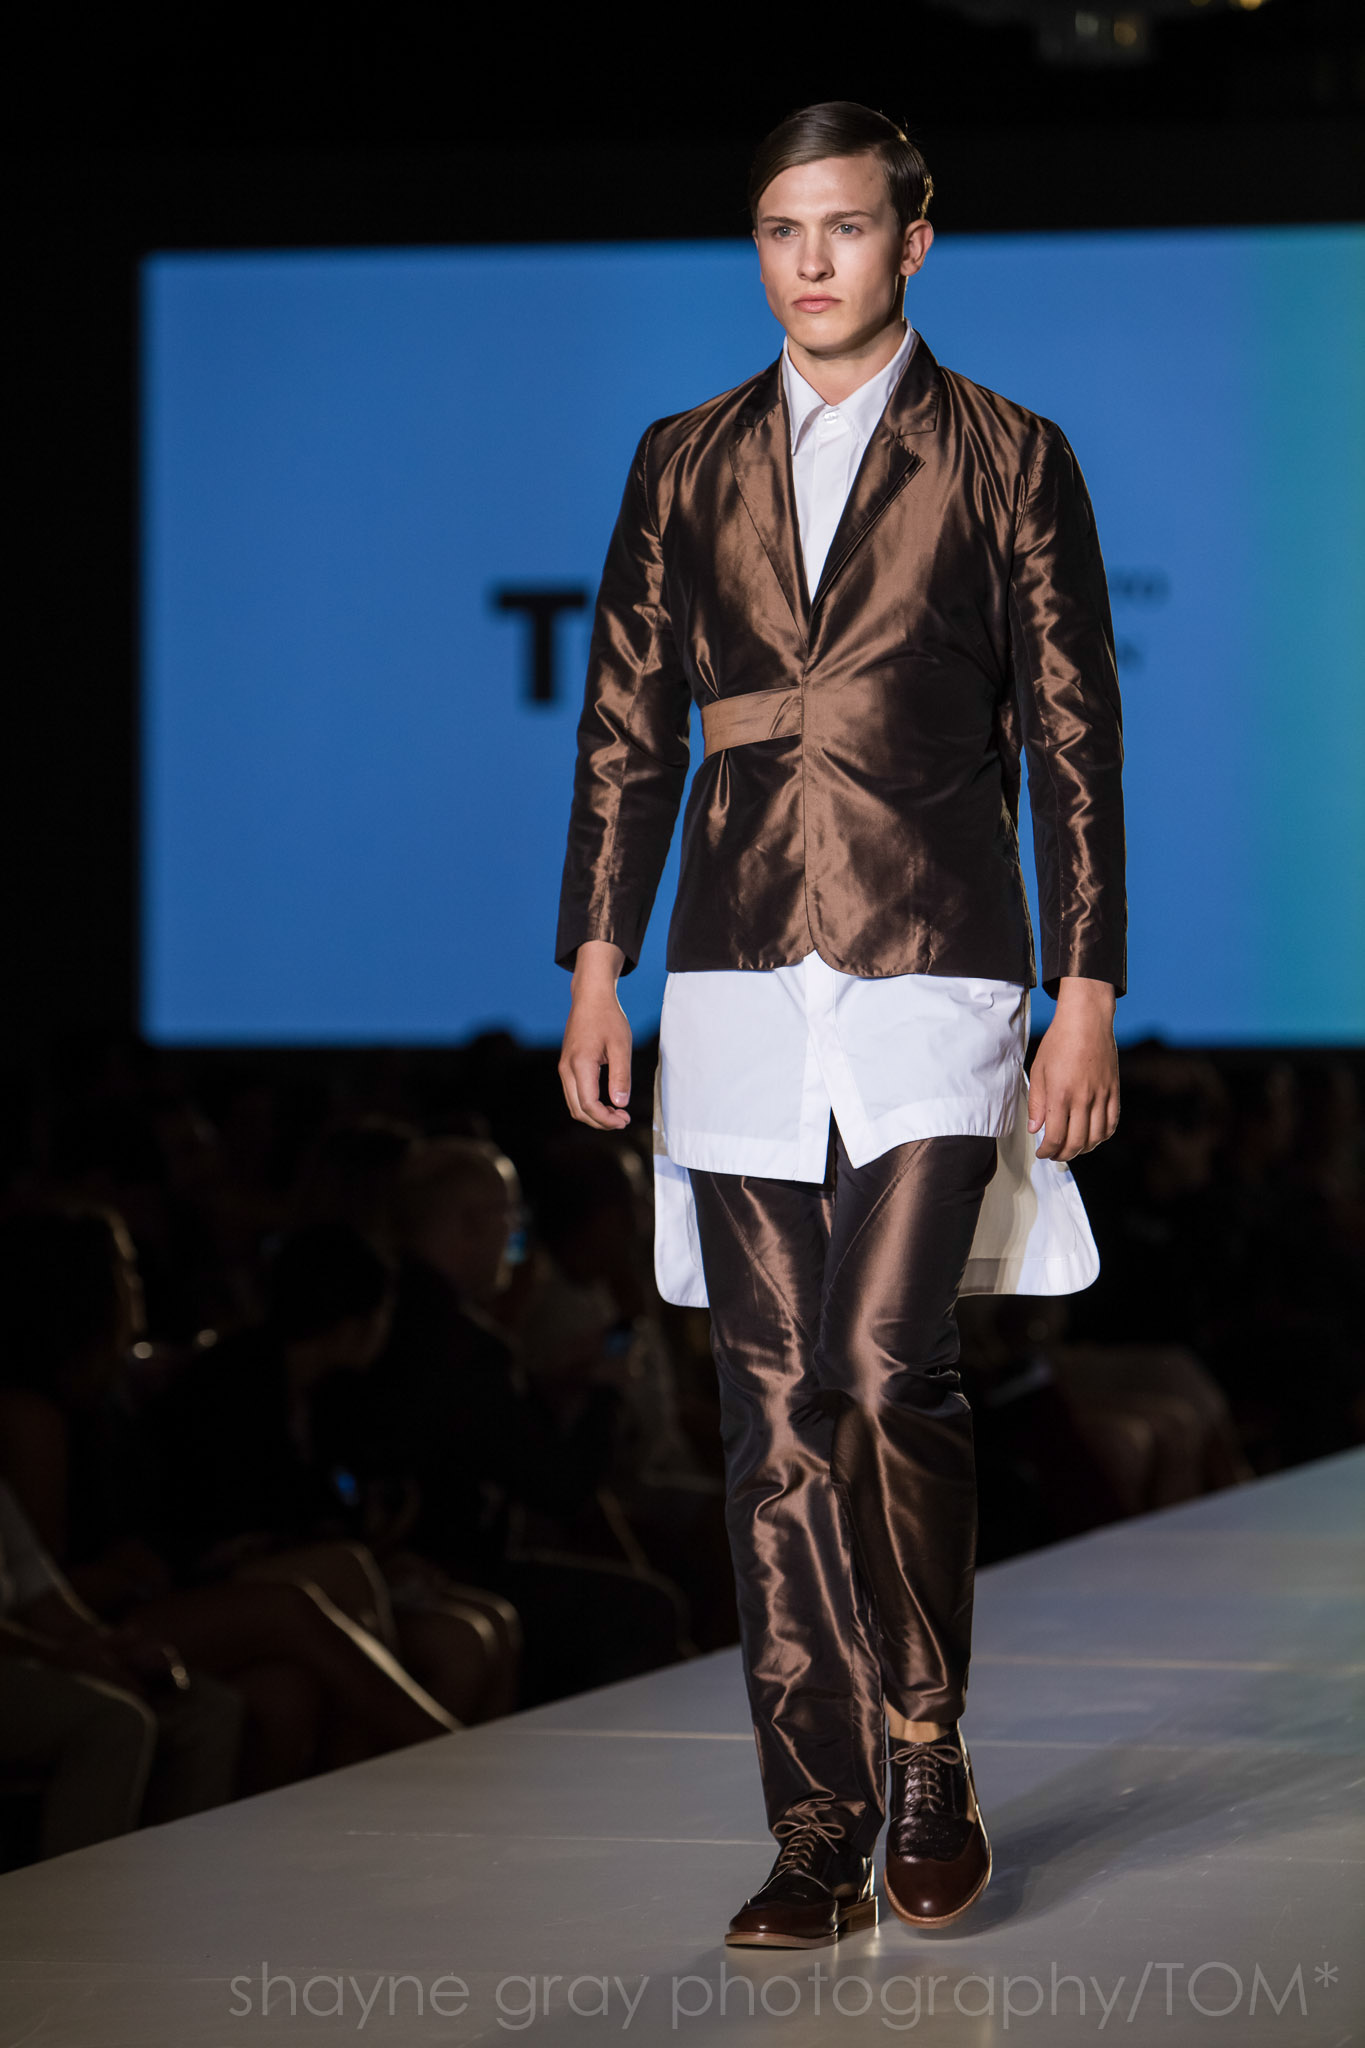 Shayne-Gray-Toronto-men's-fashion_week-TOM-paul-nathaphol-7977.jpg